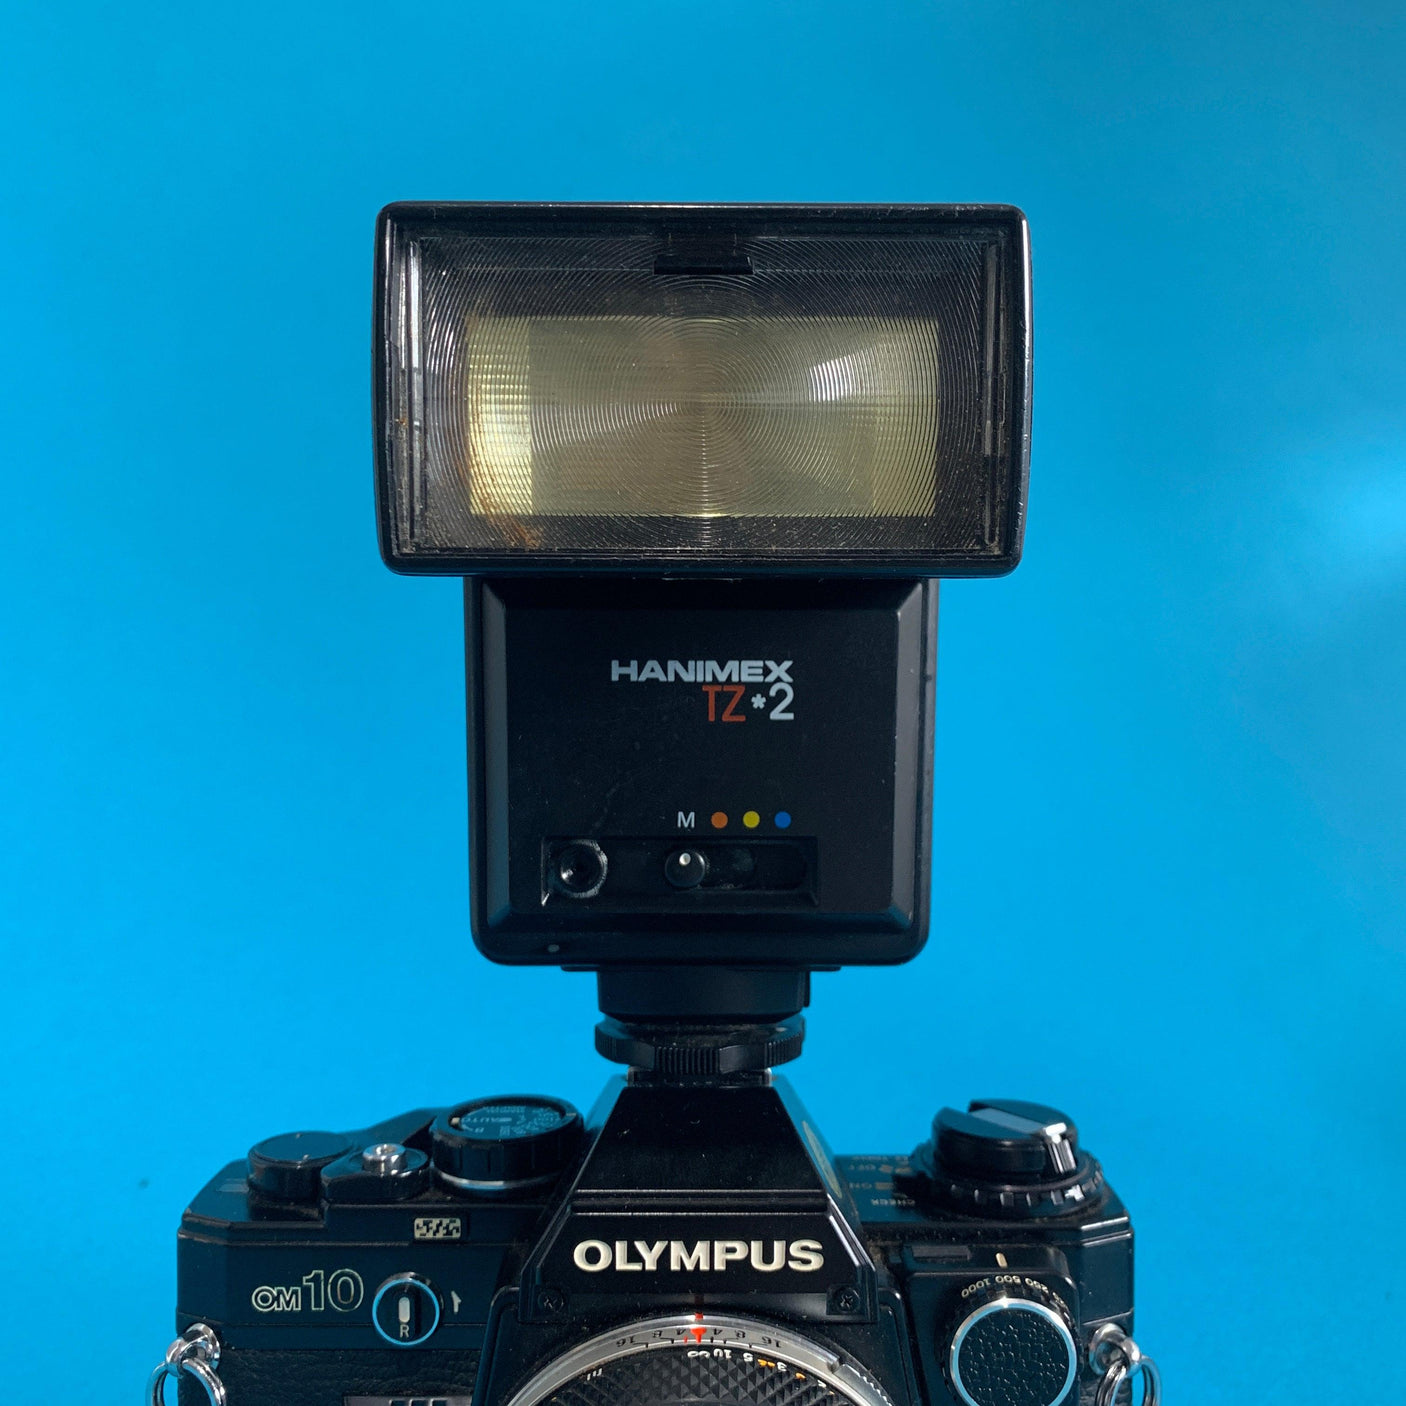 Hanimex TZ 2 External Flash Unit for 35mm Film Camera